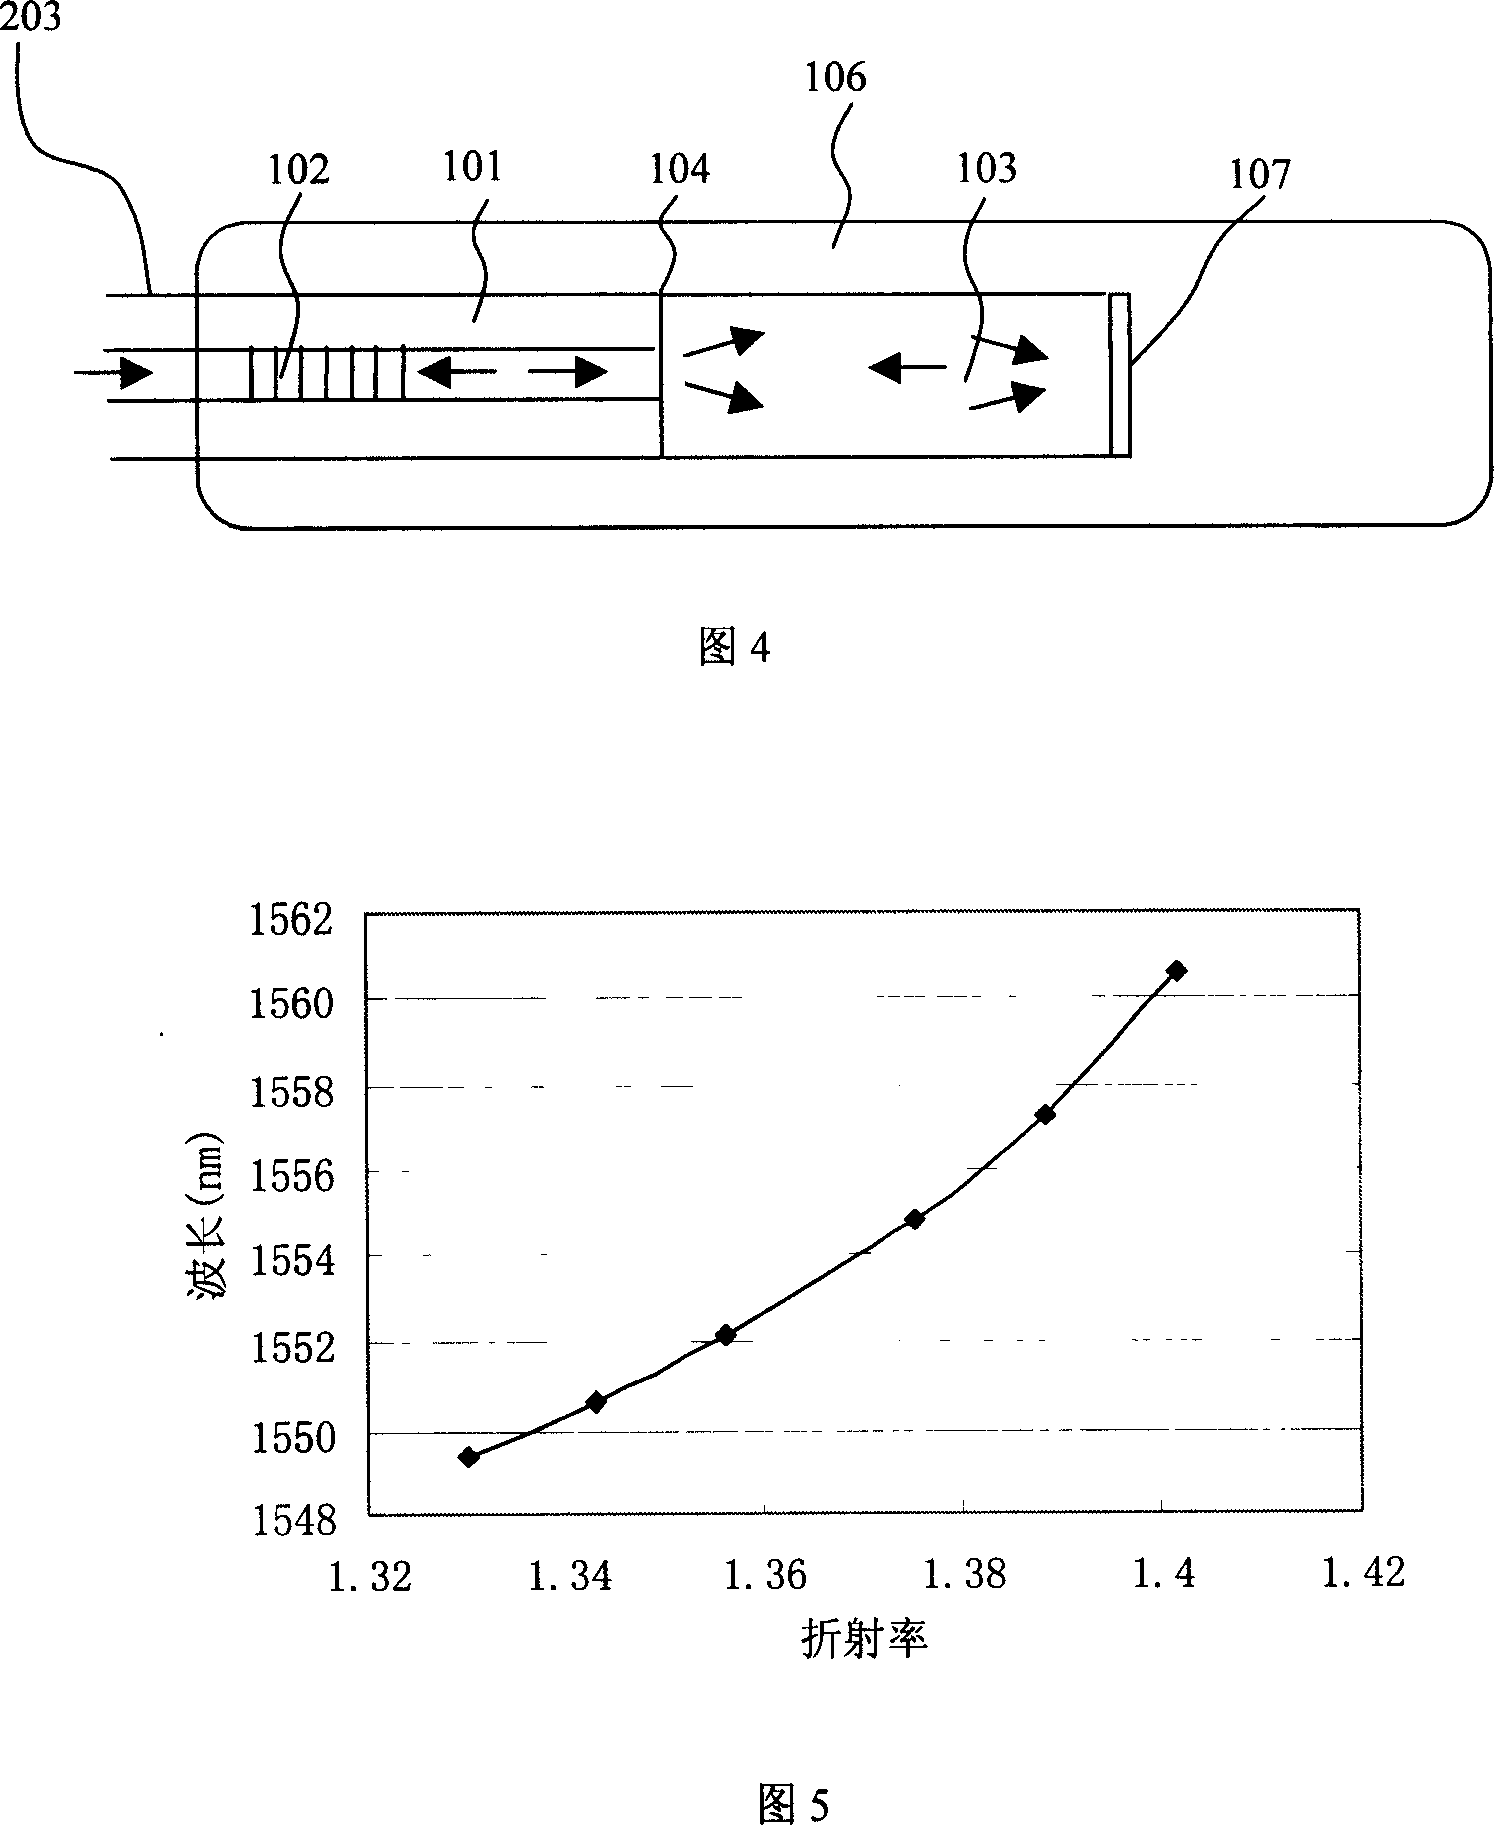 Fibre optic sensor for measuring temperature and refractive index of liquid contemporarily